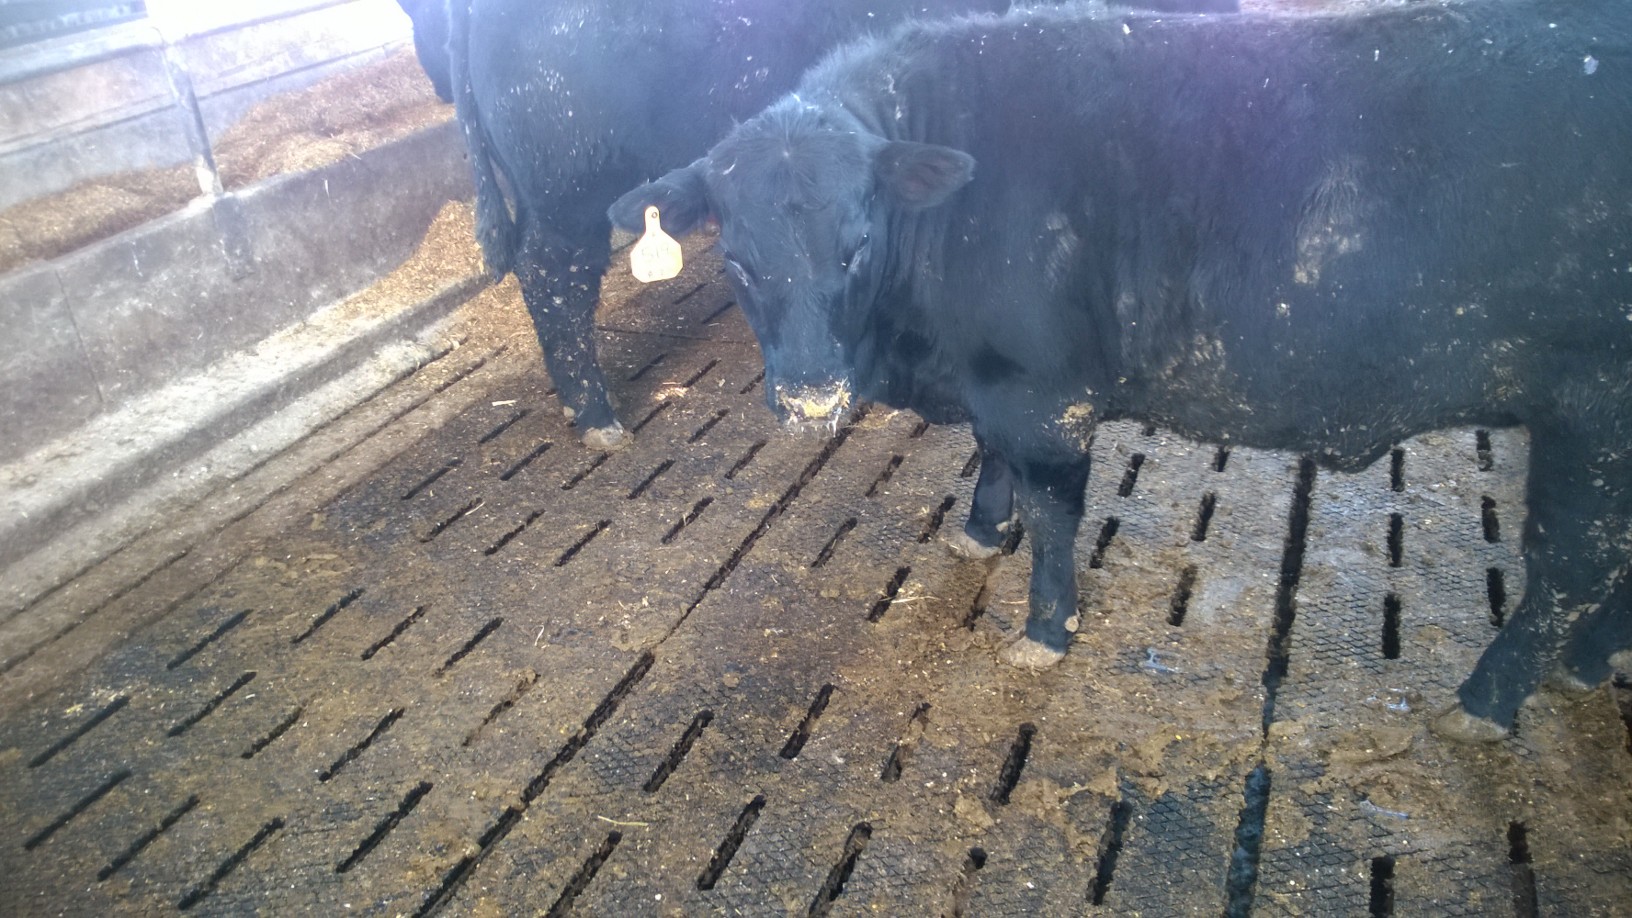 Rubber floor mat - Maxgrip - ANIMAT Inc. - for cow breeding